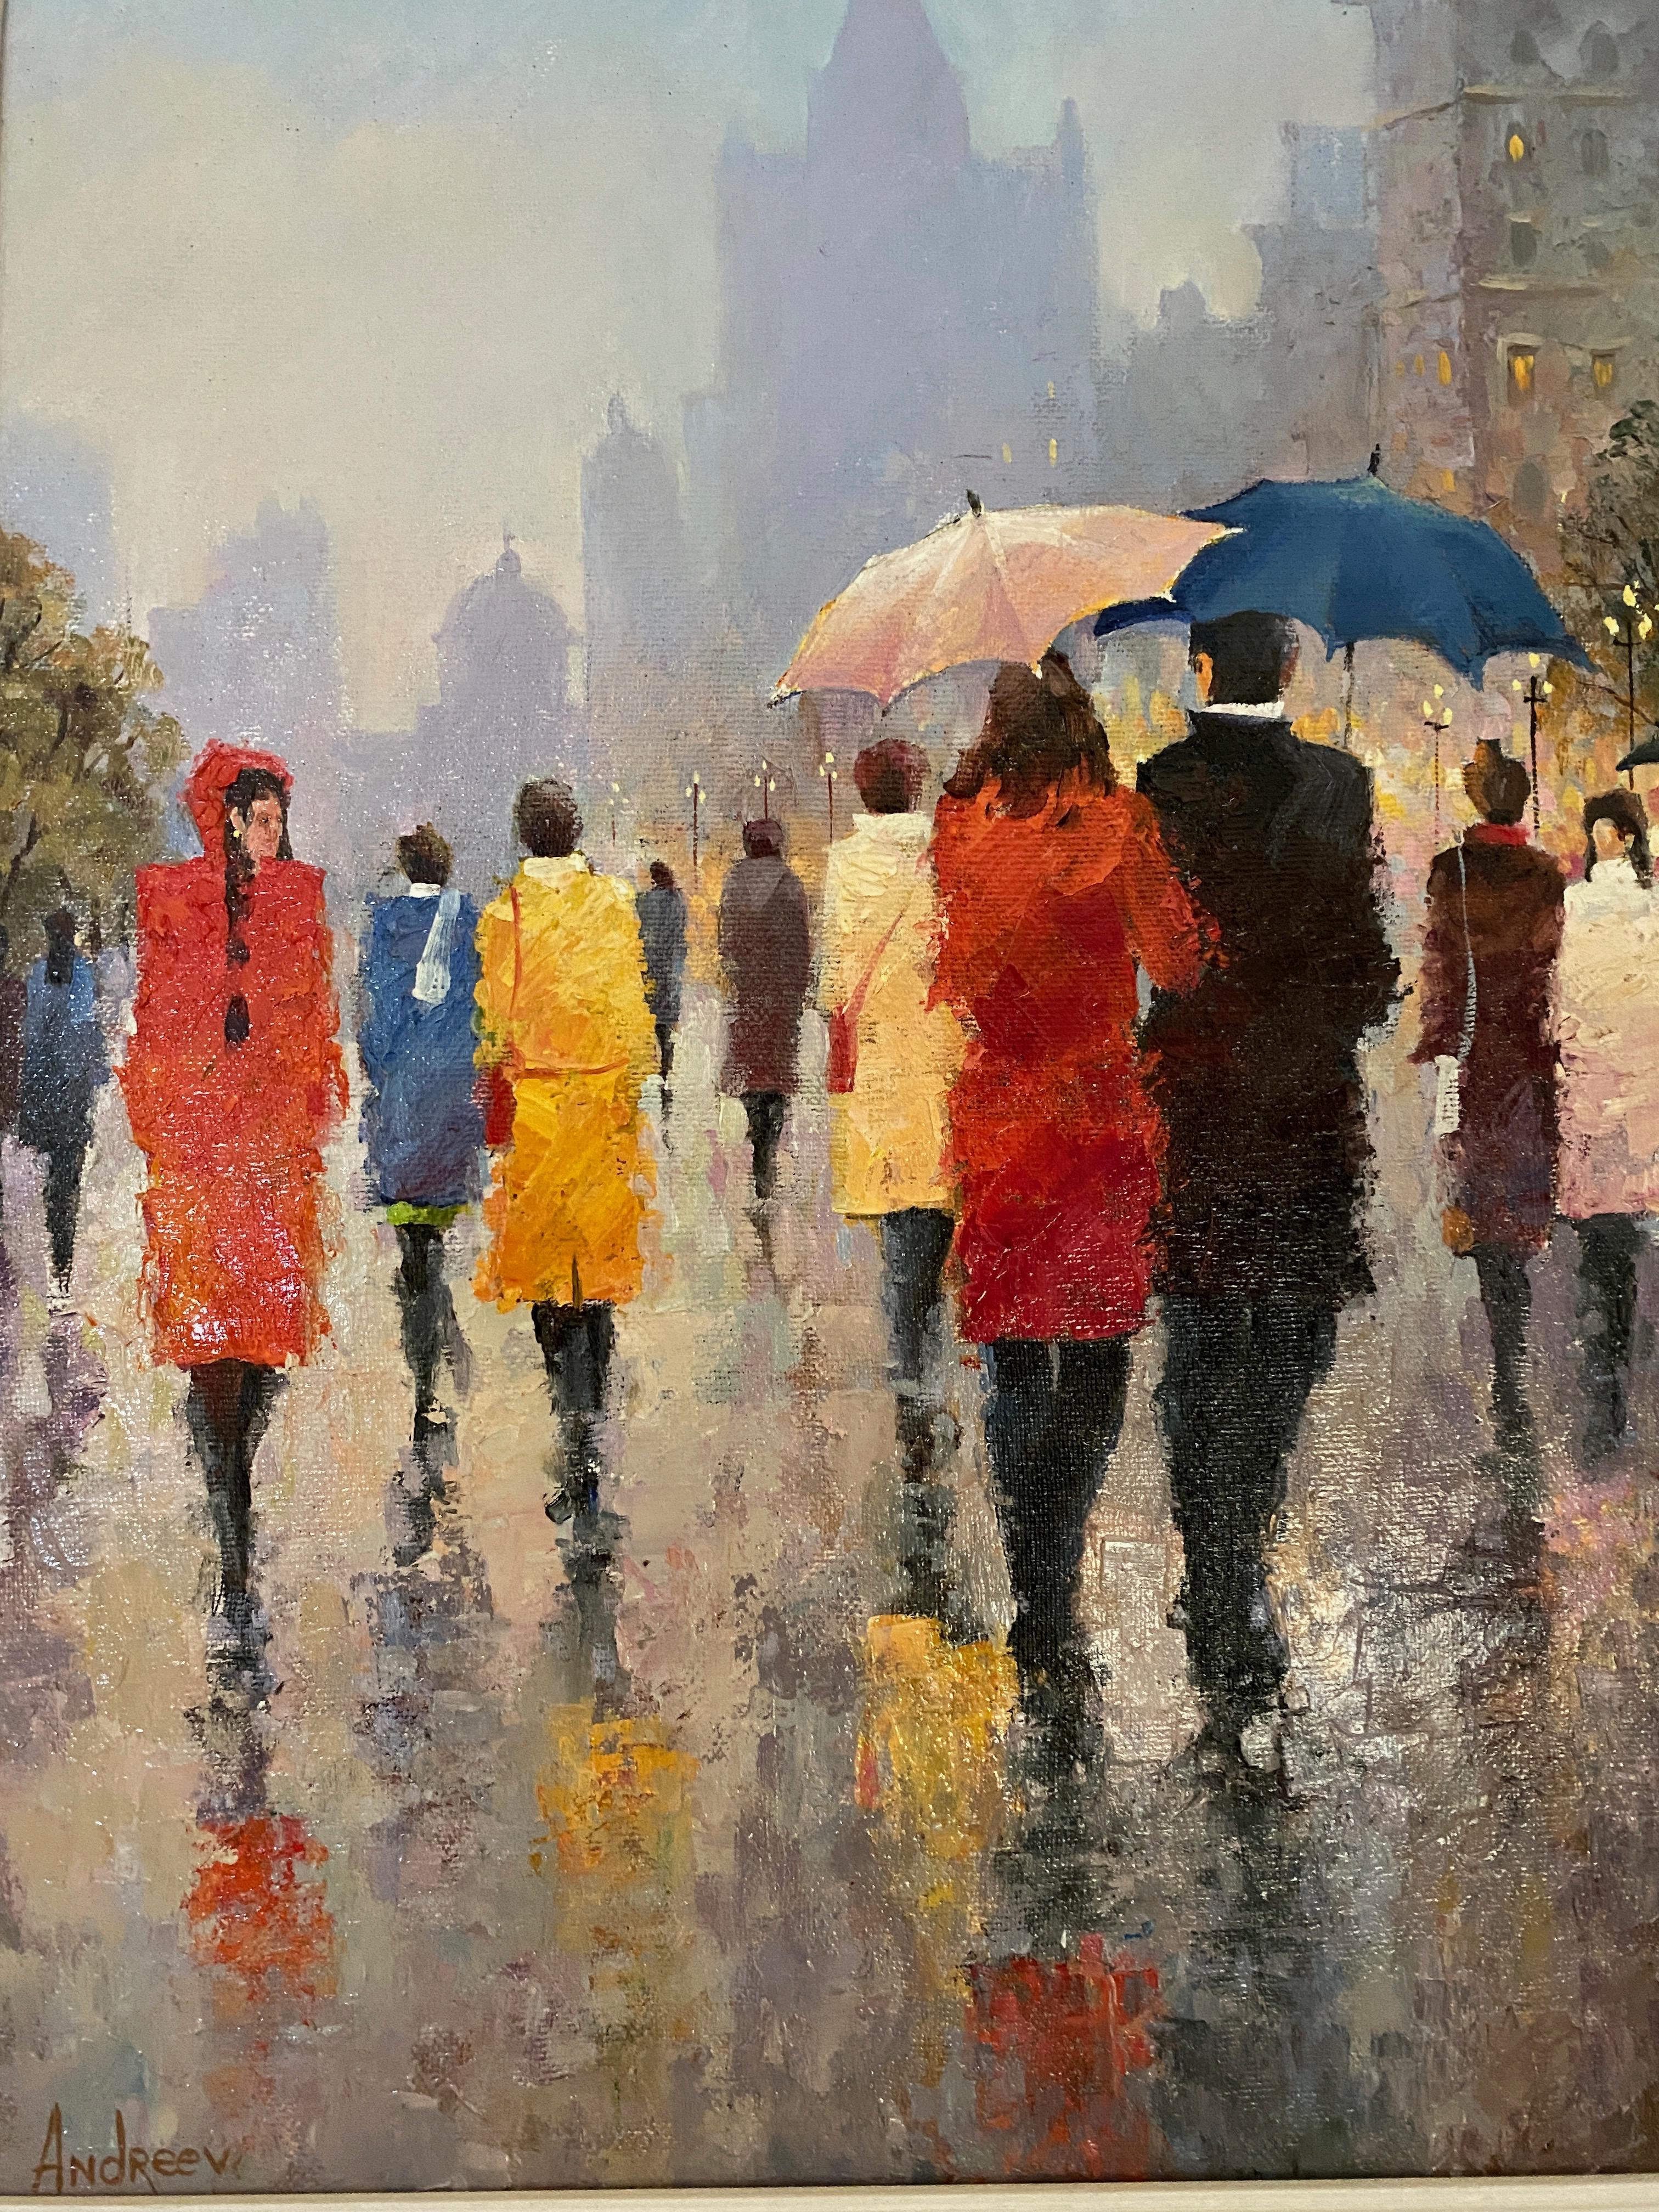 rainy scene painting